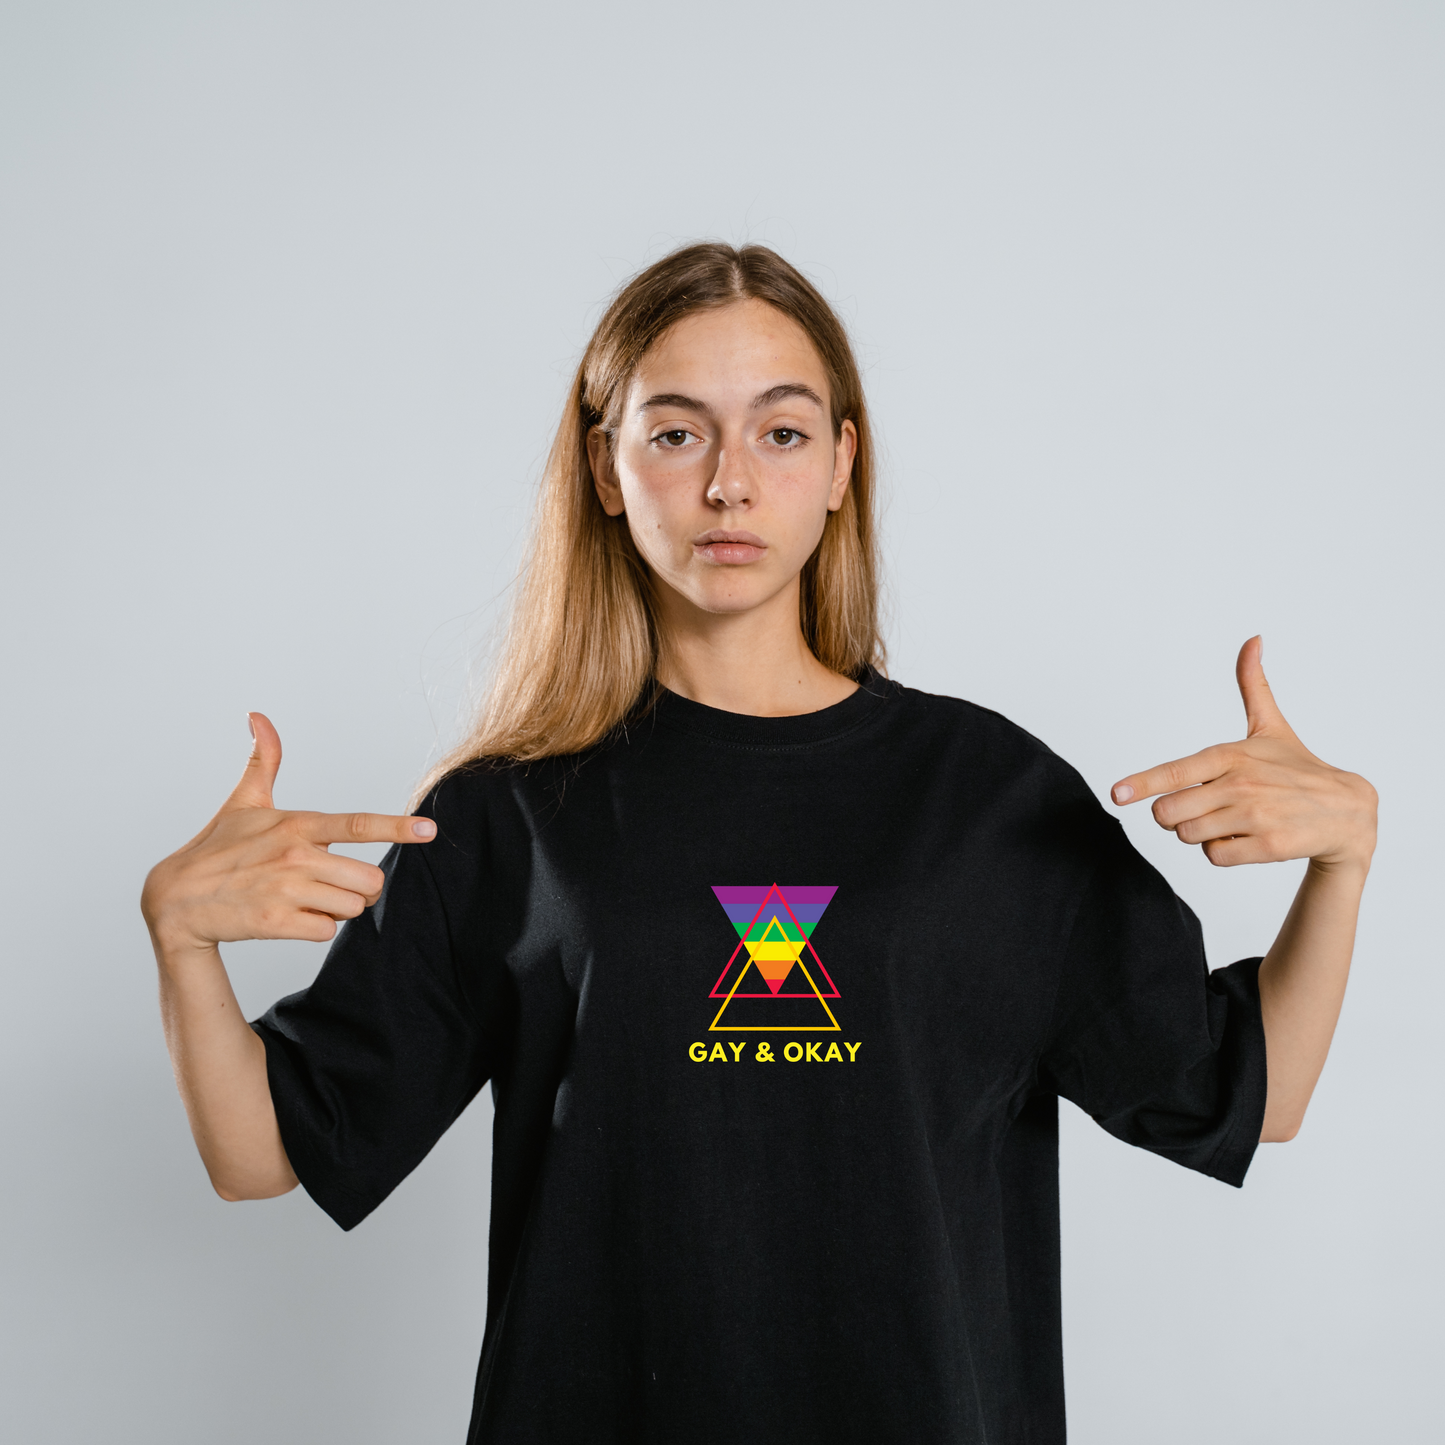 Gay & okay T-shirt